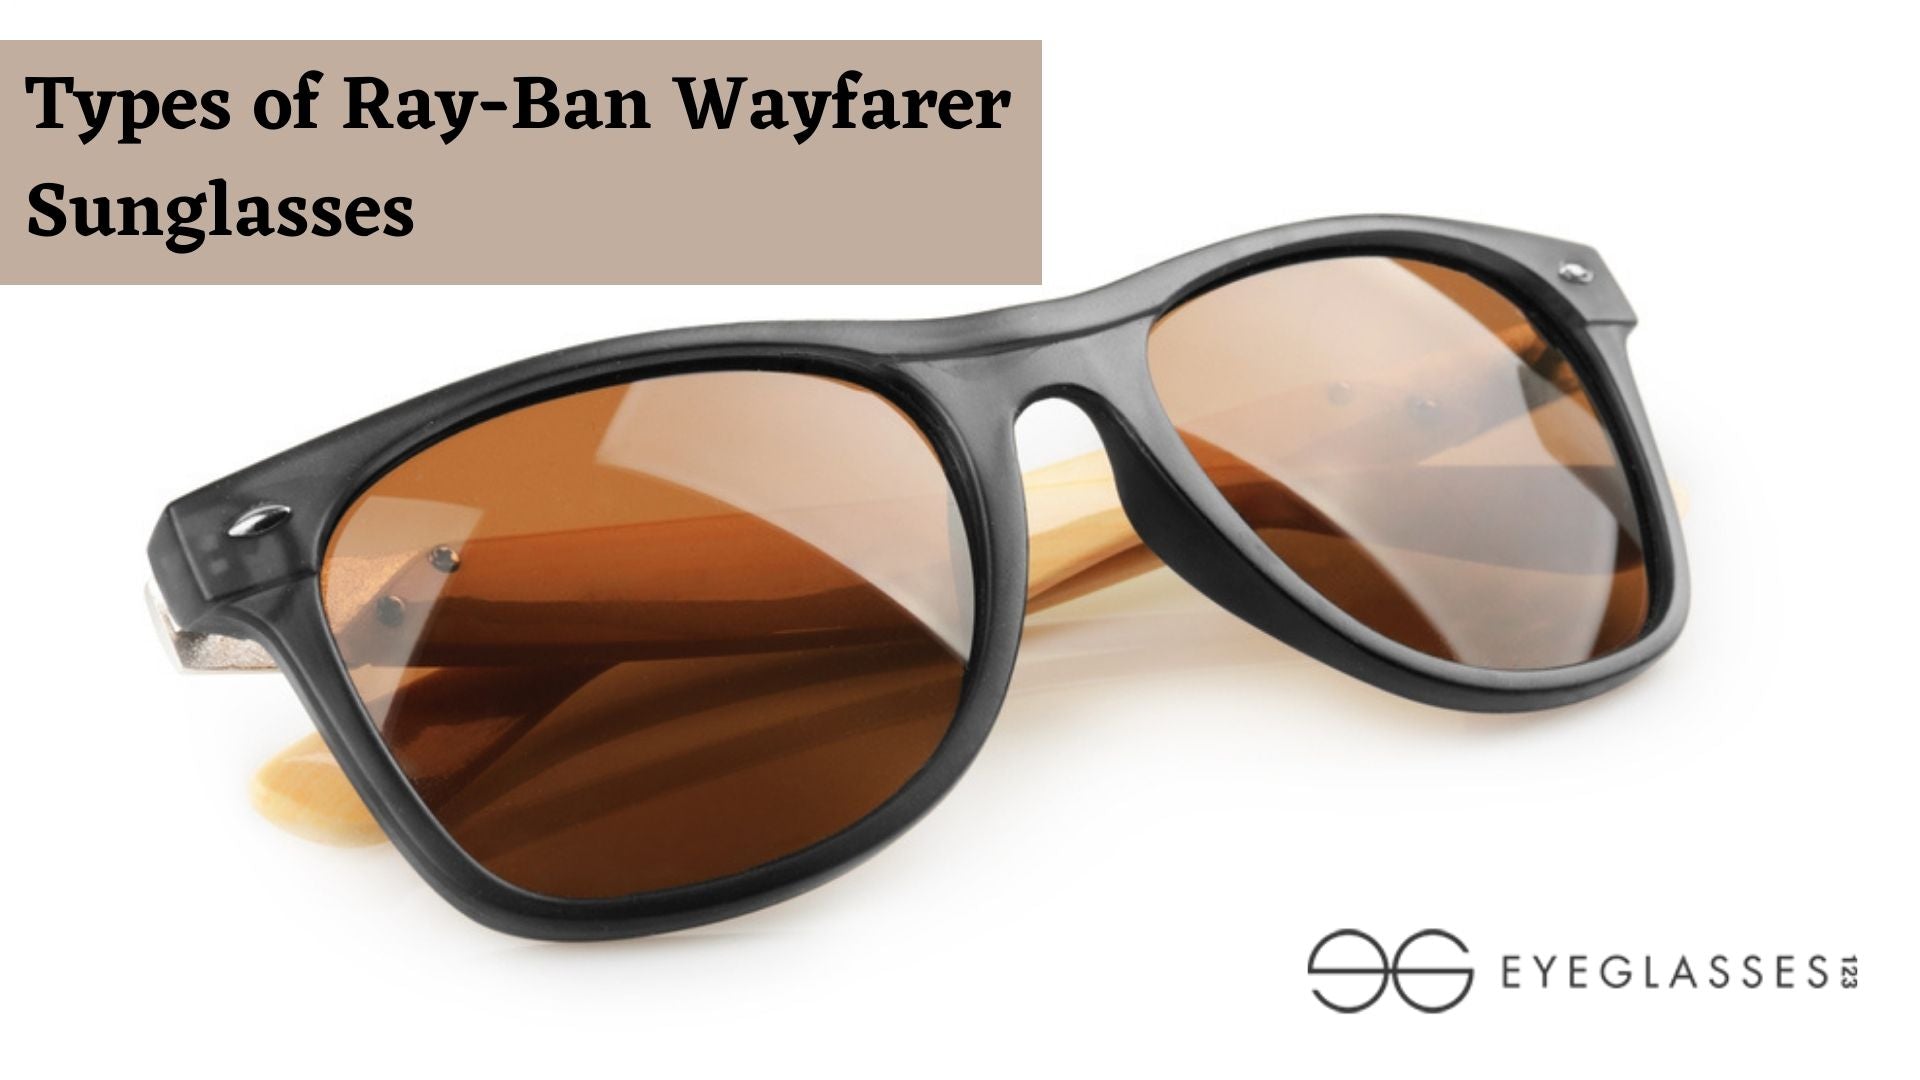 Types of Ray-Ban Wayfarer Sunglasses